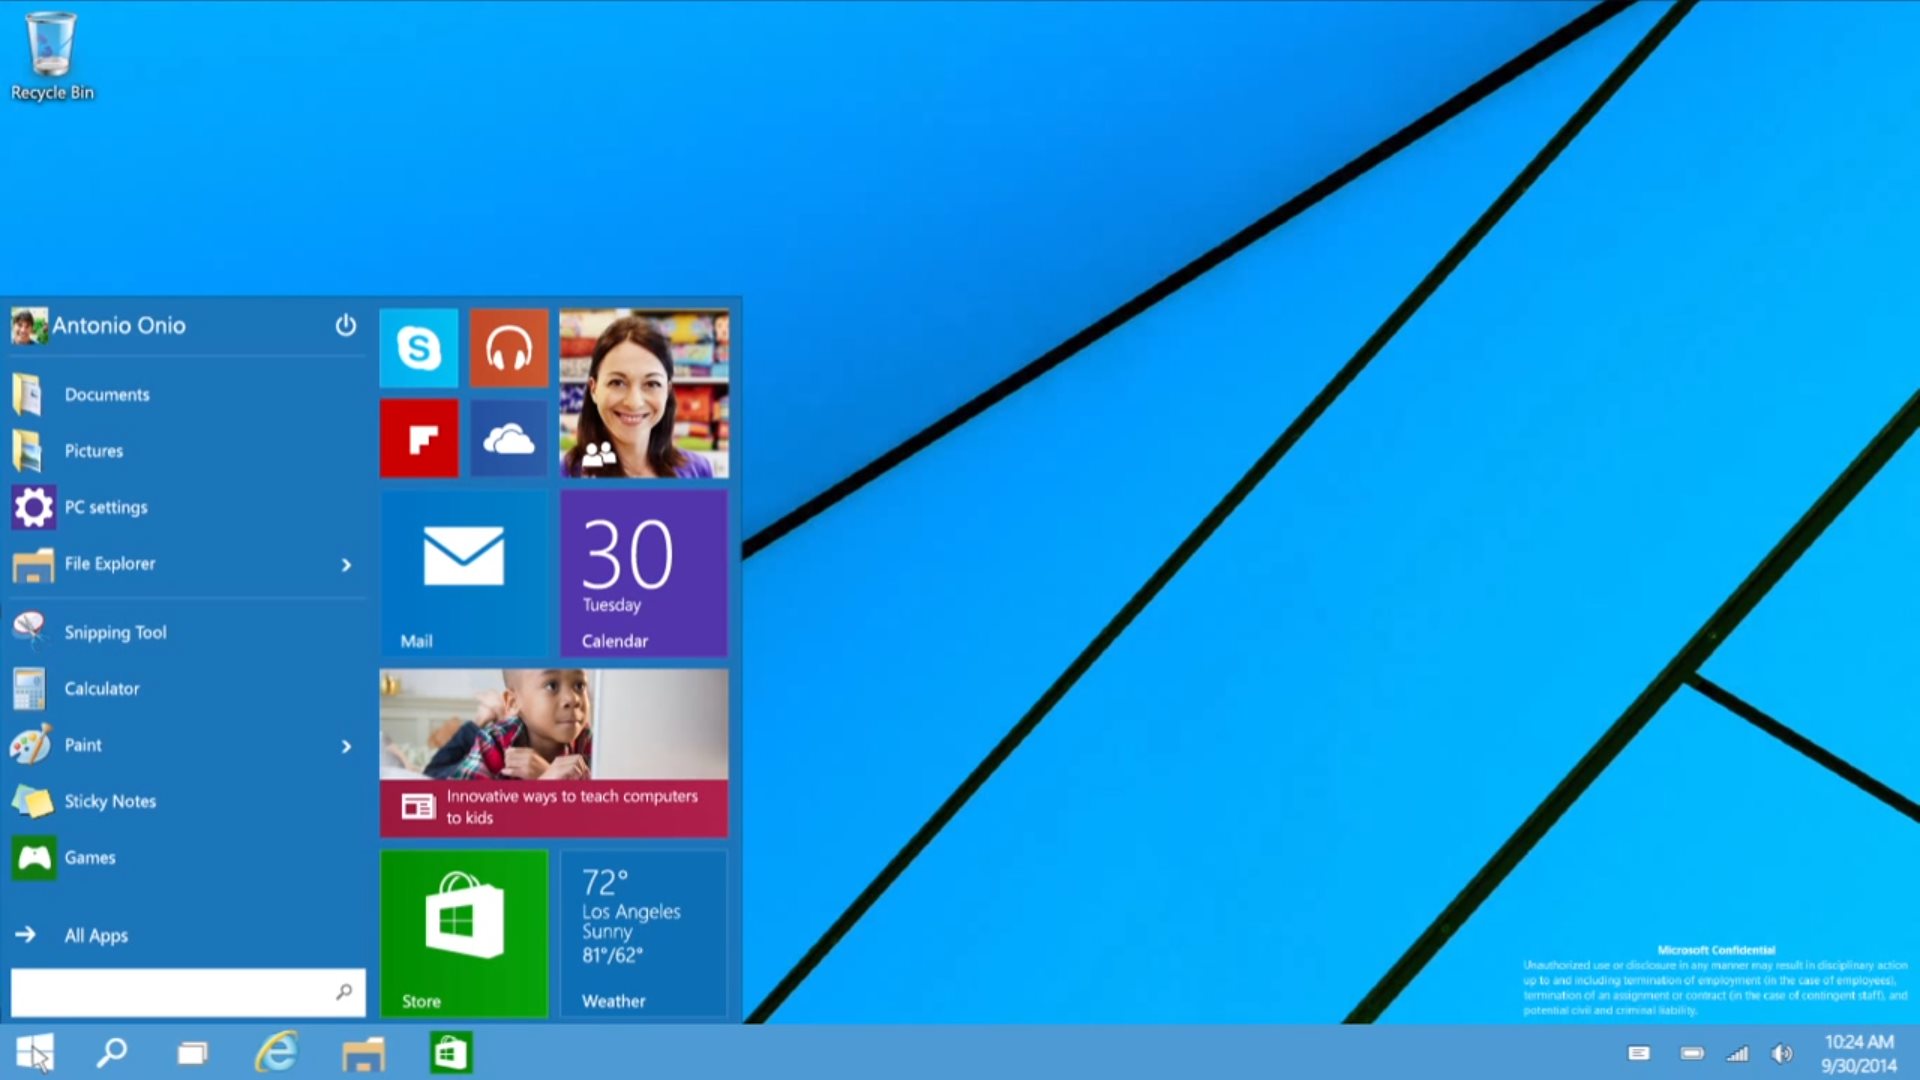 Windows Charms Bar Removed No Start Screen For Desktops